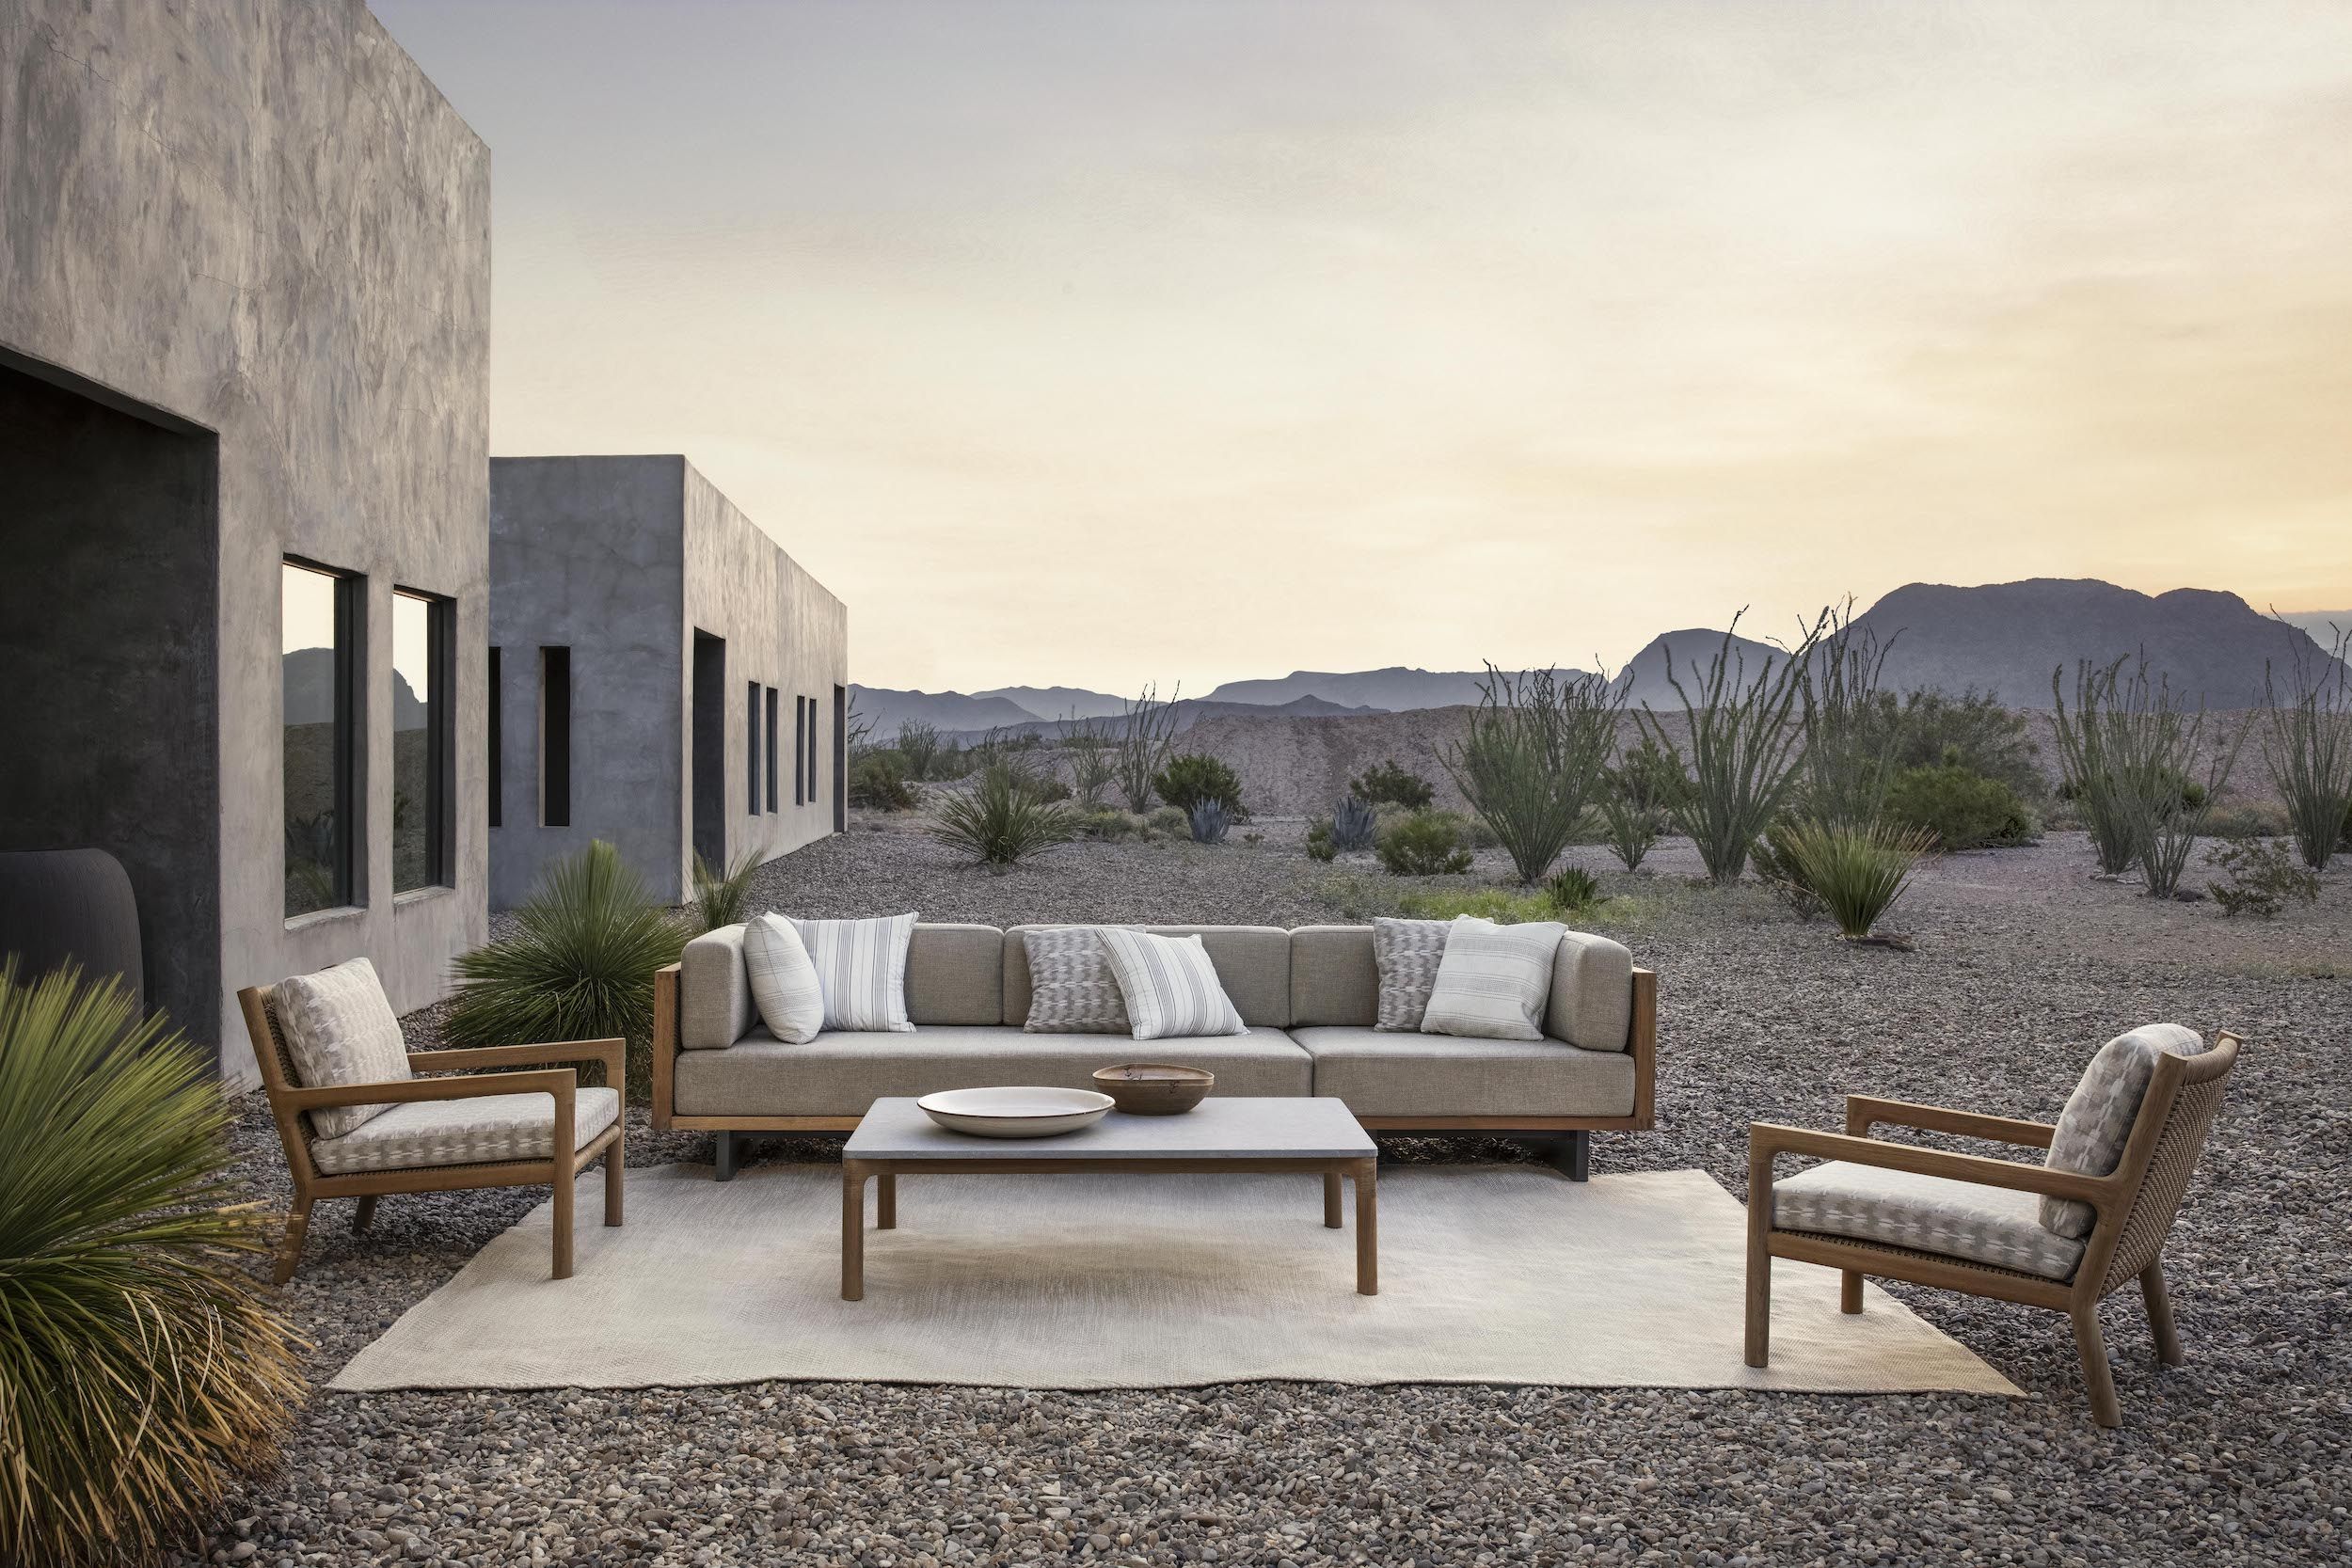 Stylish Outdoor Furniture Designed to Last, Season After Season